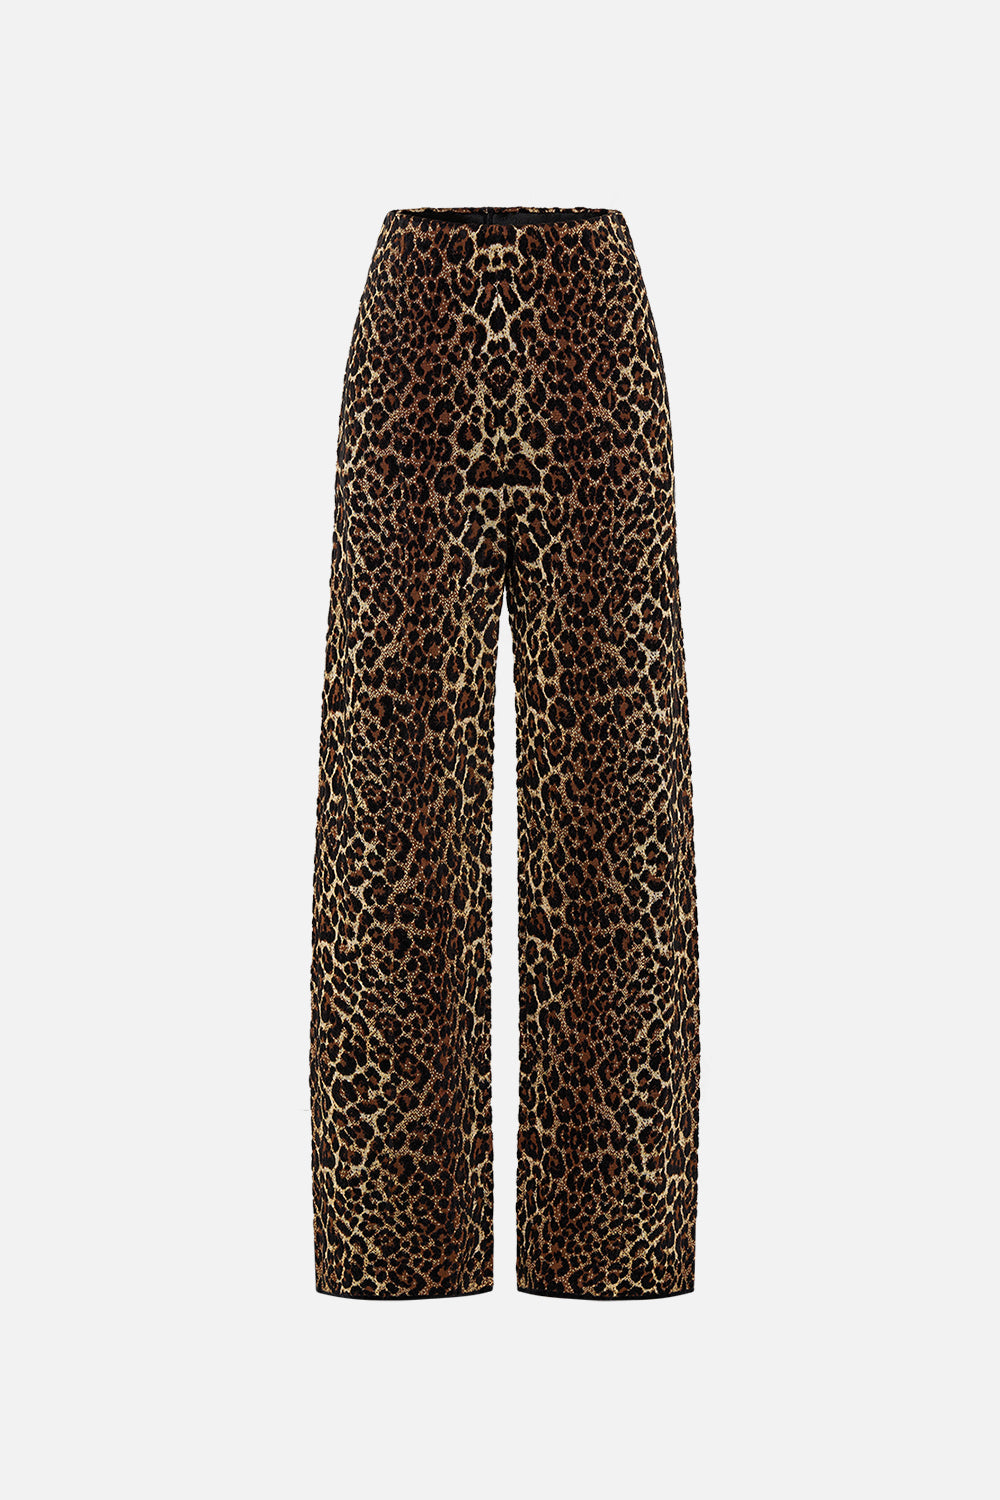 CAMILLA leopard jacquard straight leg knit pant in Amsterglam print.